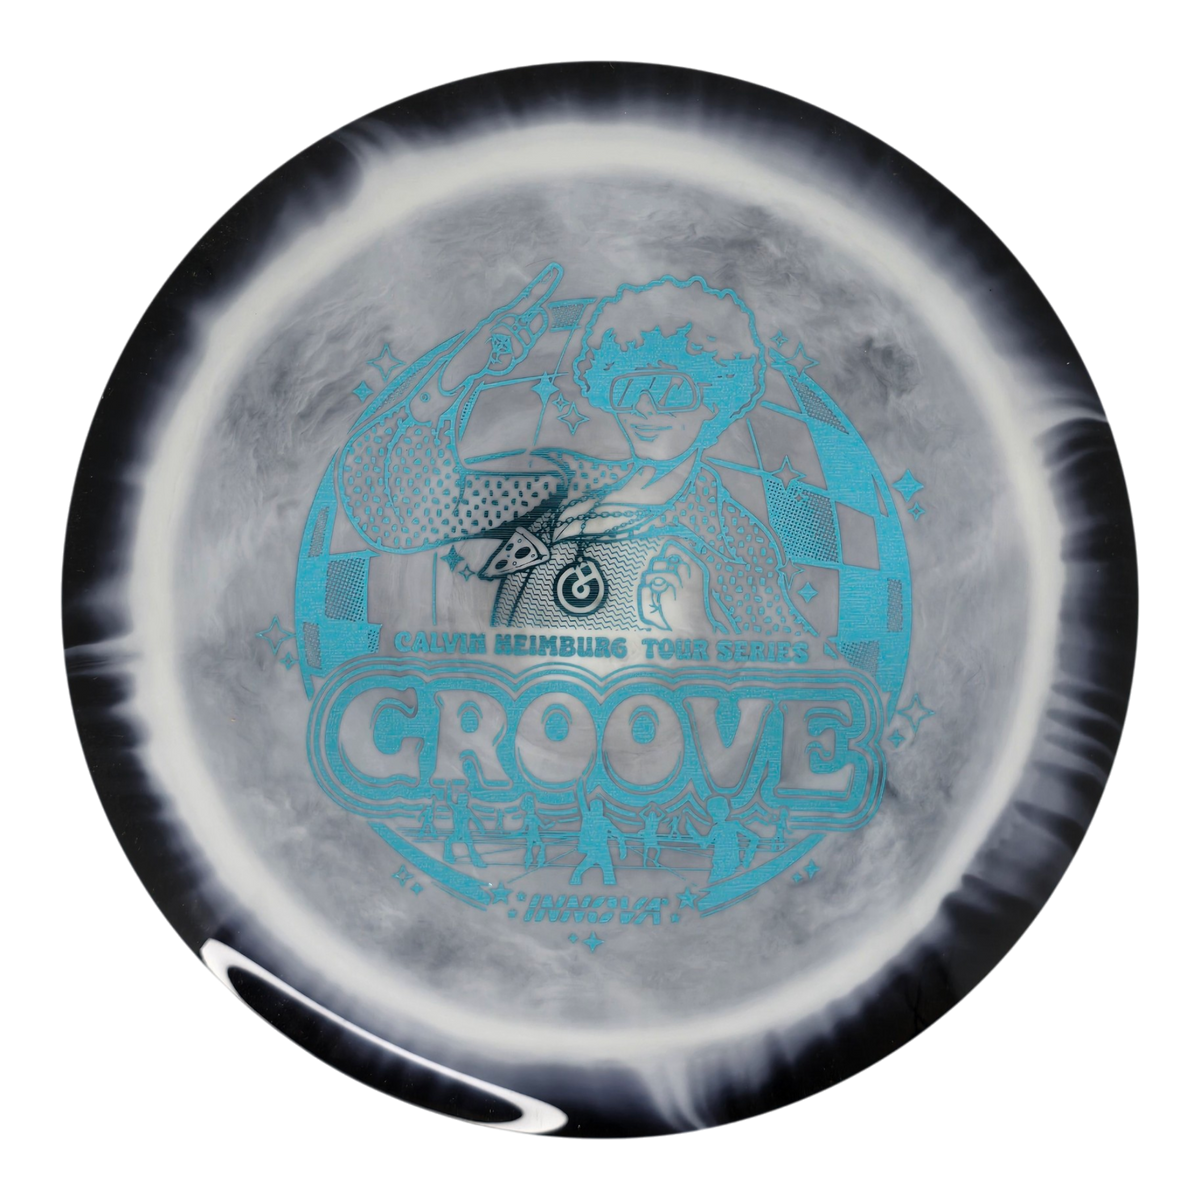 Innova Halo Star Groove - Calvin Heimburg April Fools (2024)